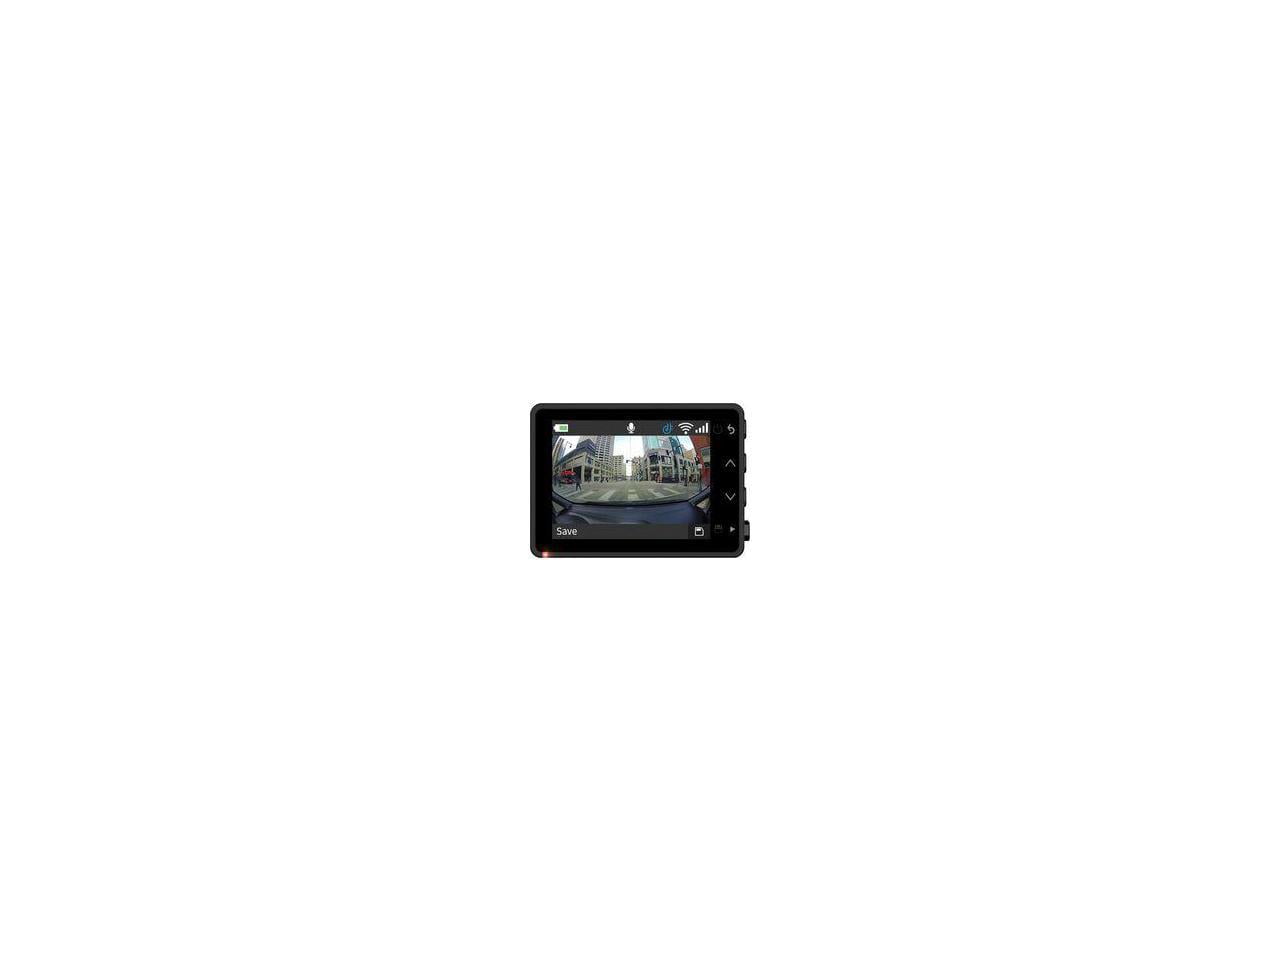 Garmin 67W 1440p Dash Cam, Black #010-02505-05 